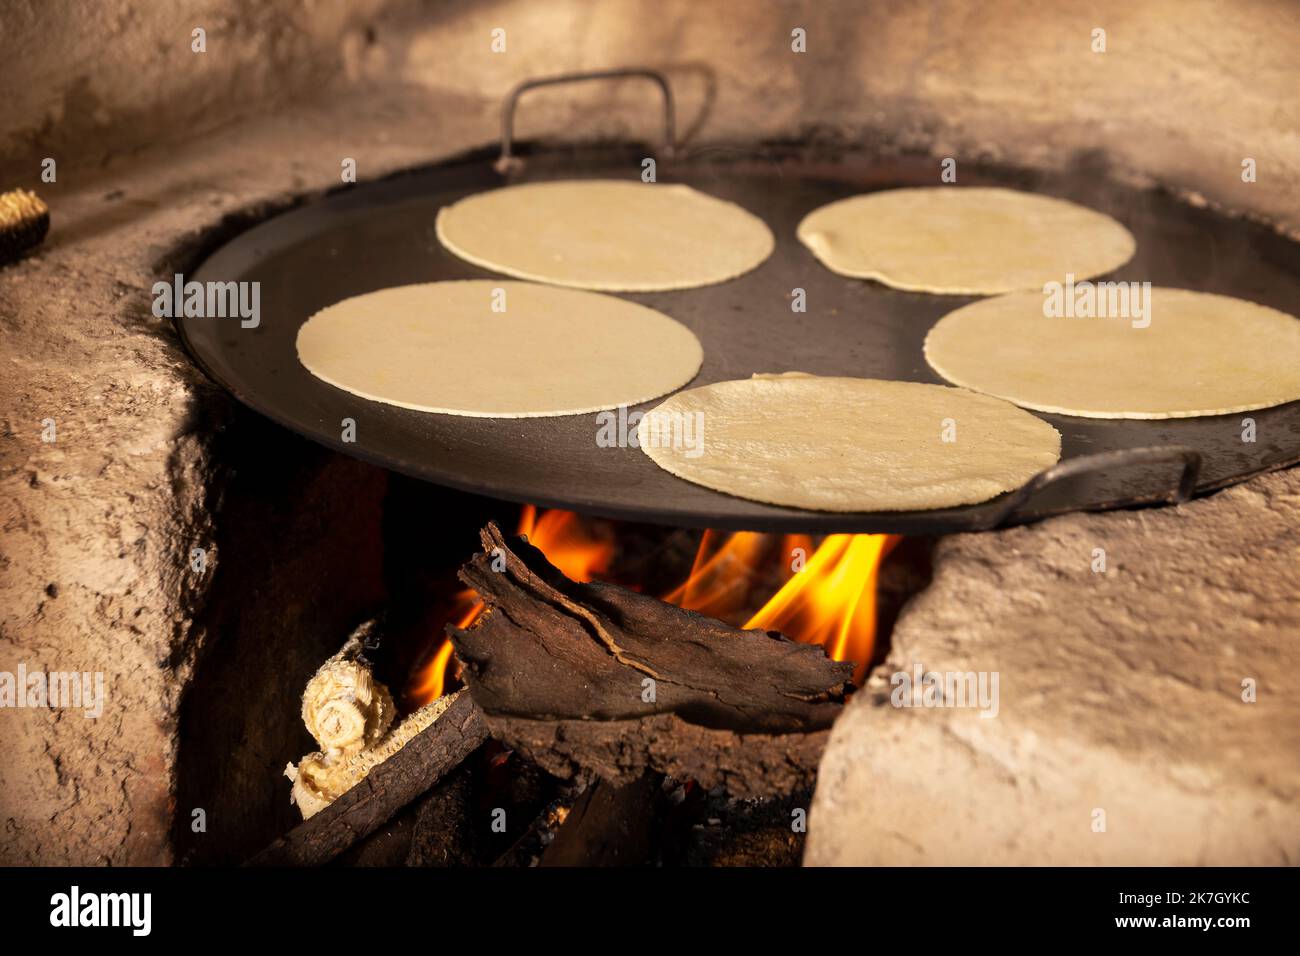  Comal Para Tortillas Grandes Para Estufas for